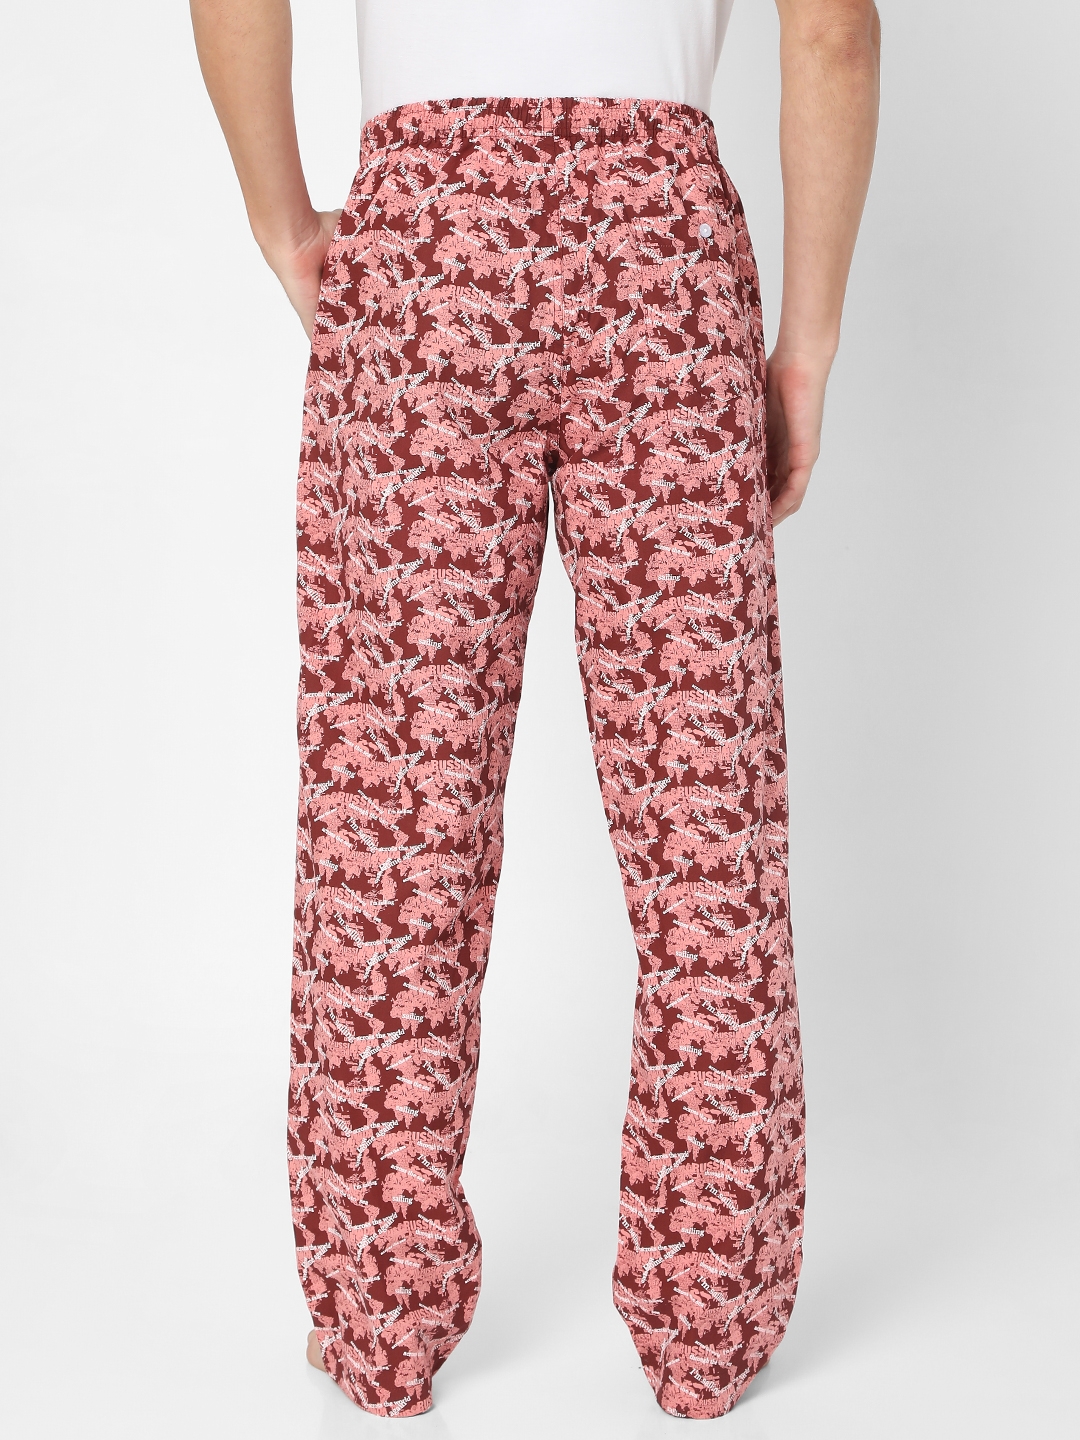 spykar | Underjeans by Spykar Red Cotton Blend Regular Fit Pyjama 3